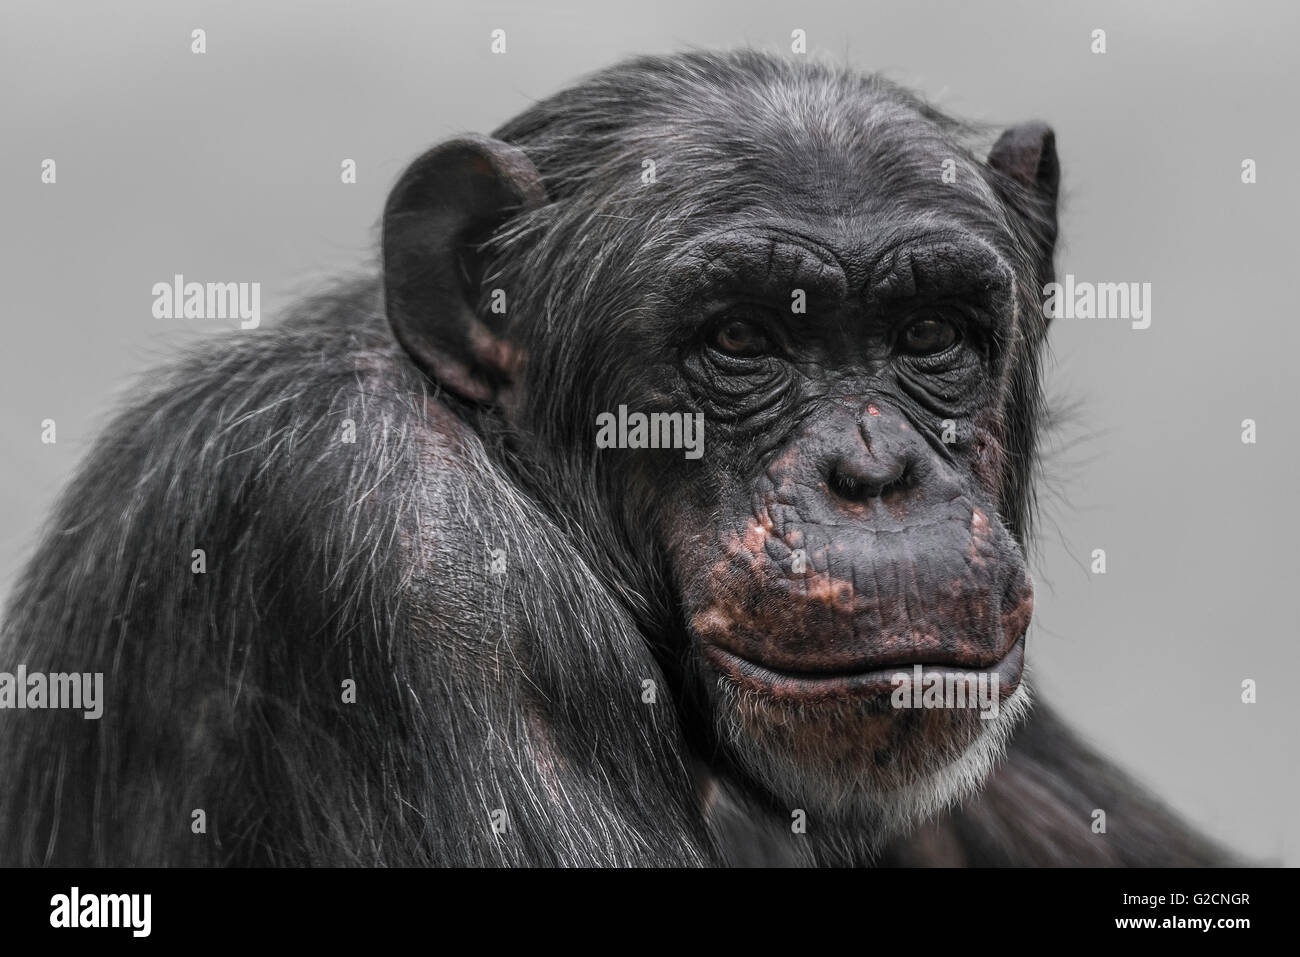 Thinking chimpanzee portrait close up Magdeburg, Germany, 2016 Stock Photo